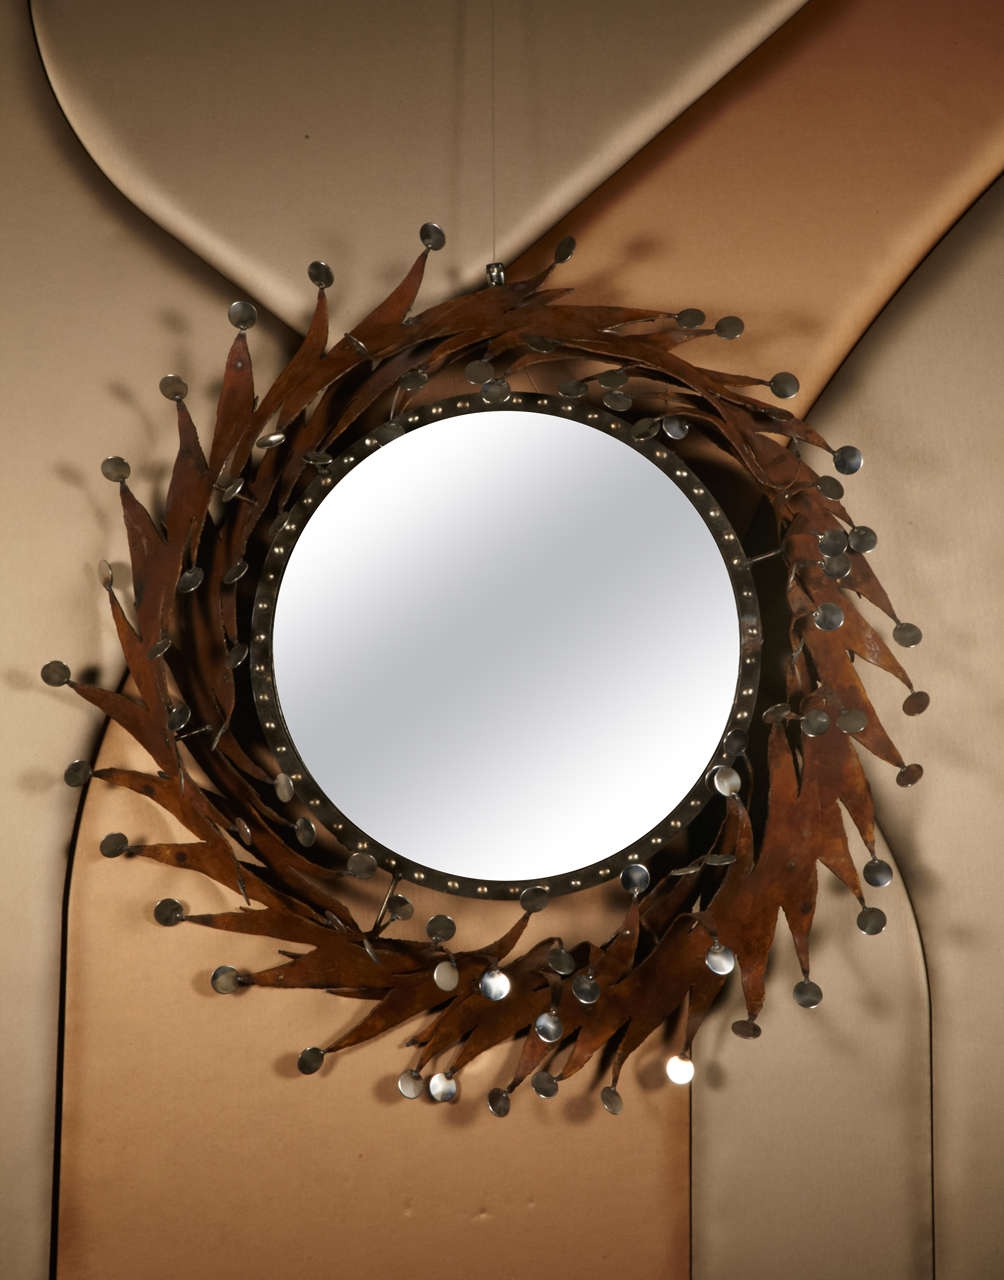 Convex mirror in corten steel with stainless medals.